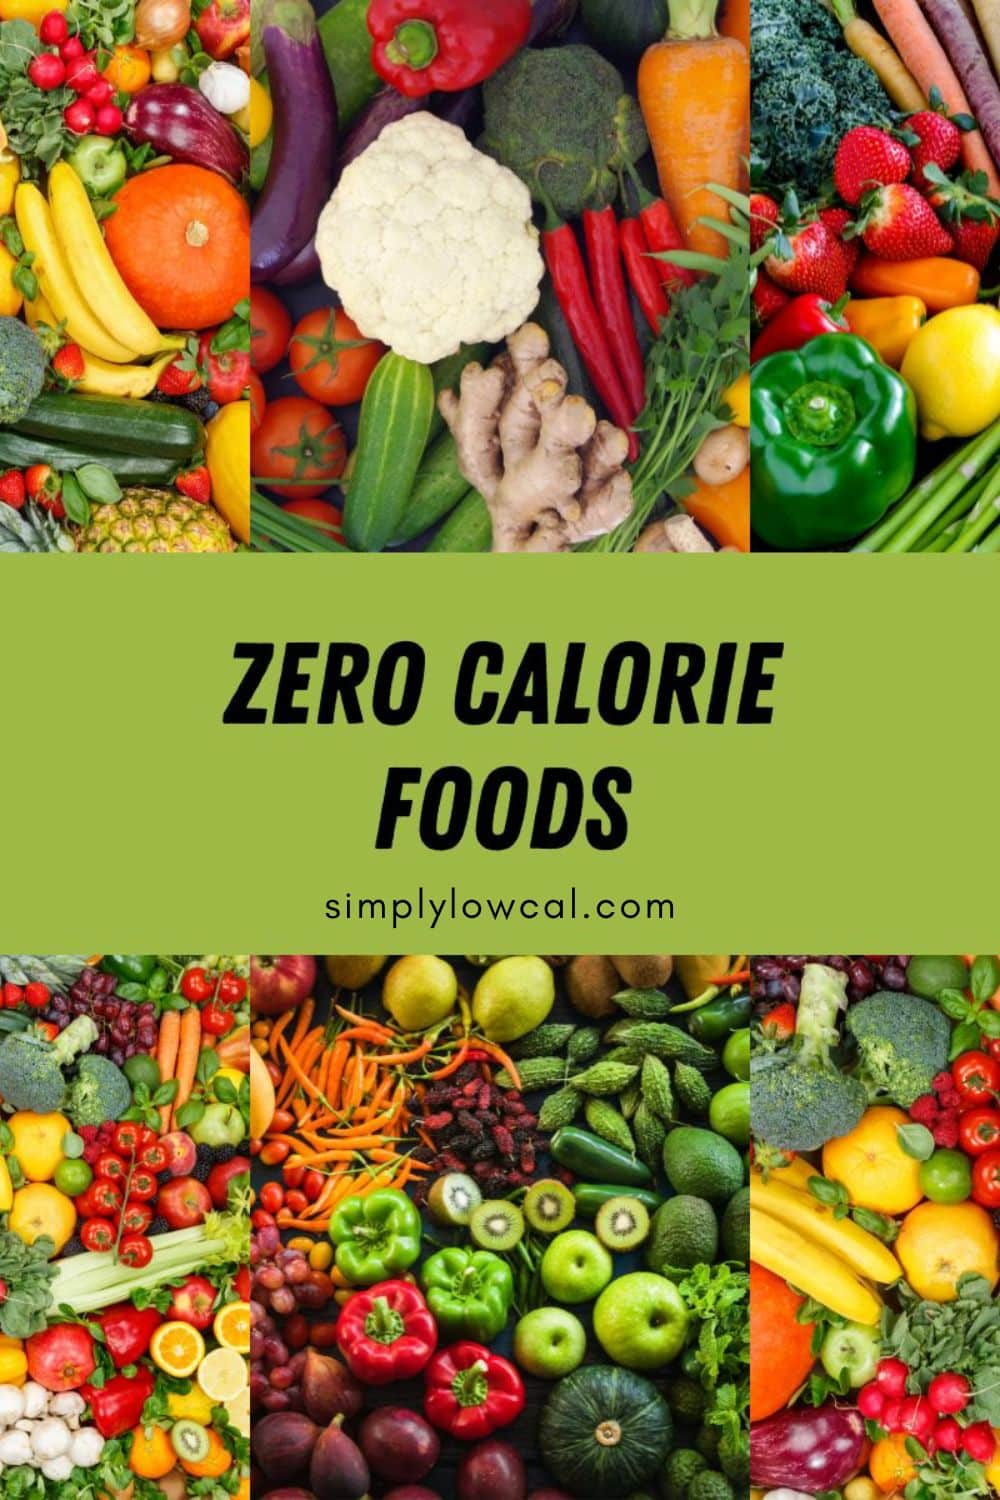 Zero Calorie Foods - Simply Low Cal